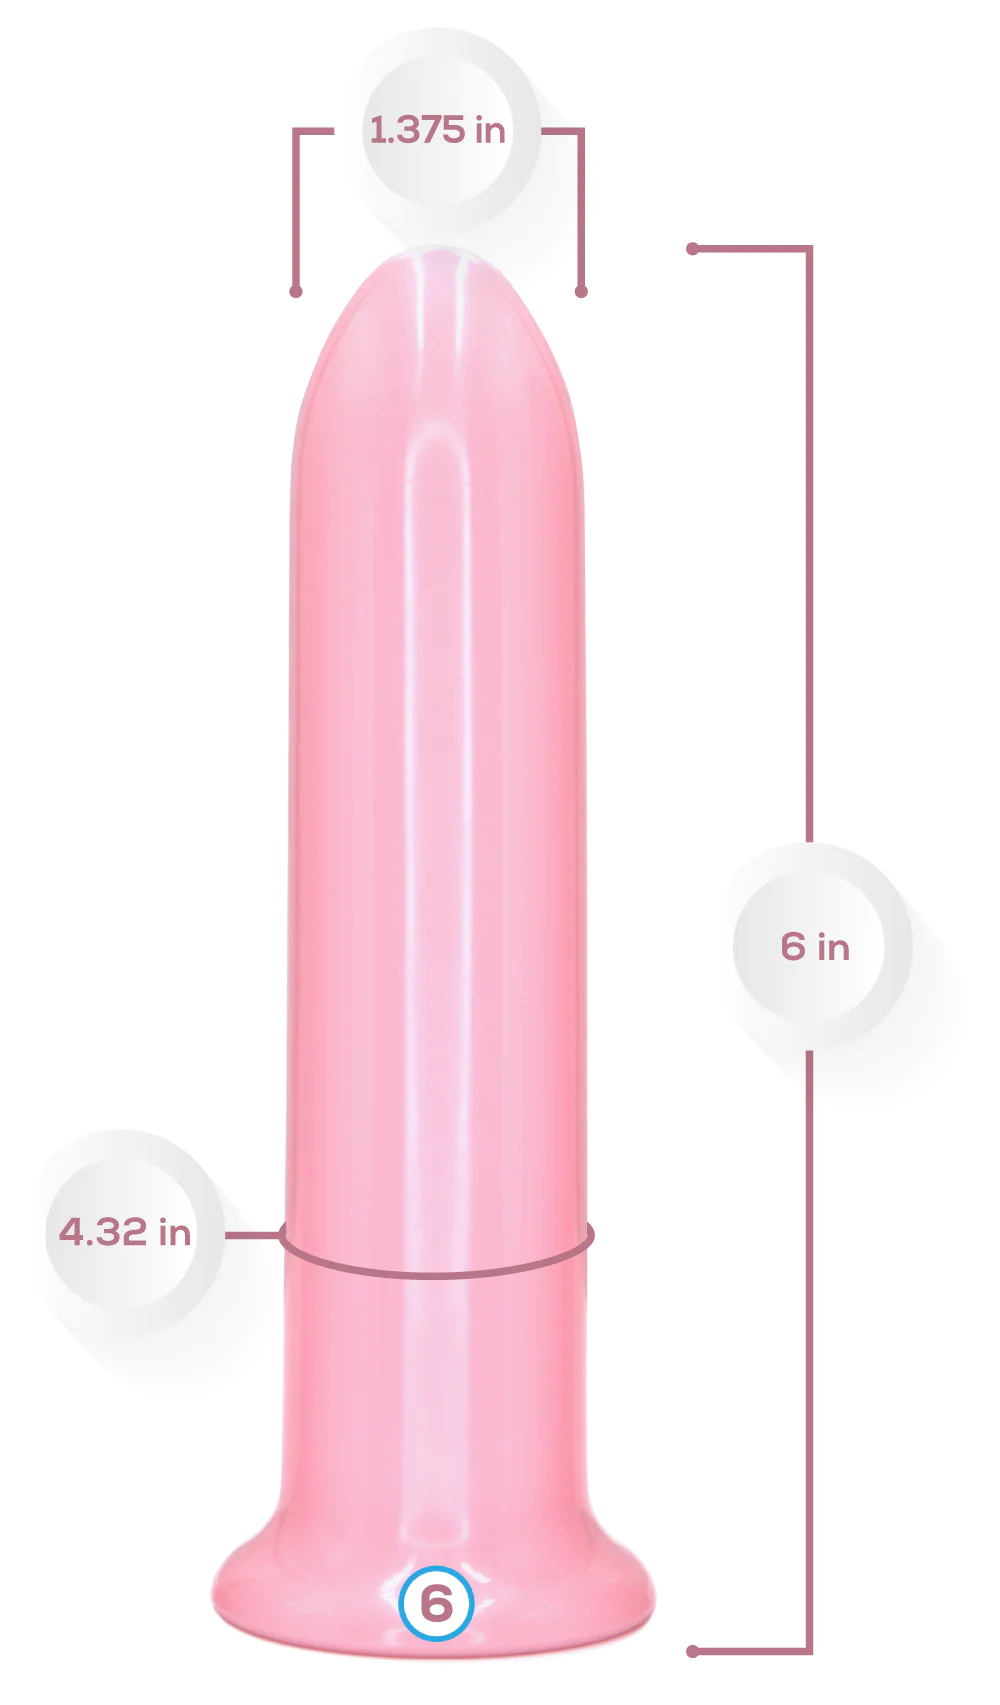 VuVa Neodymium Magnetic Vaginal Dilators Sizes 3,4,5,6